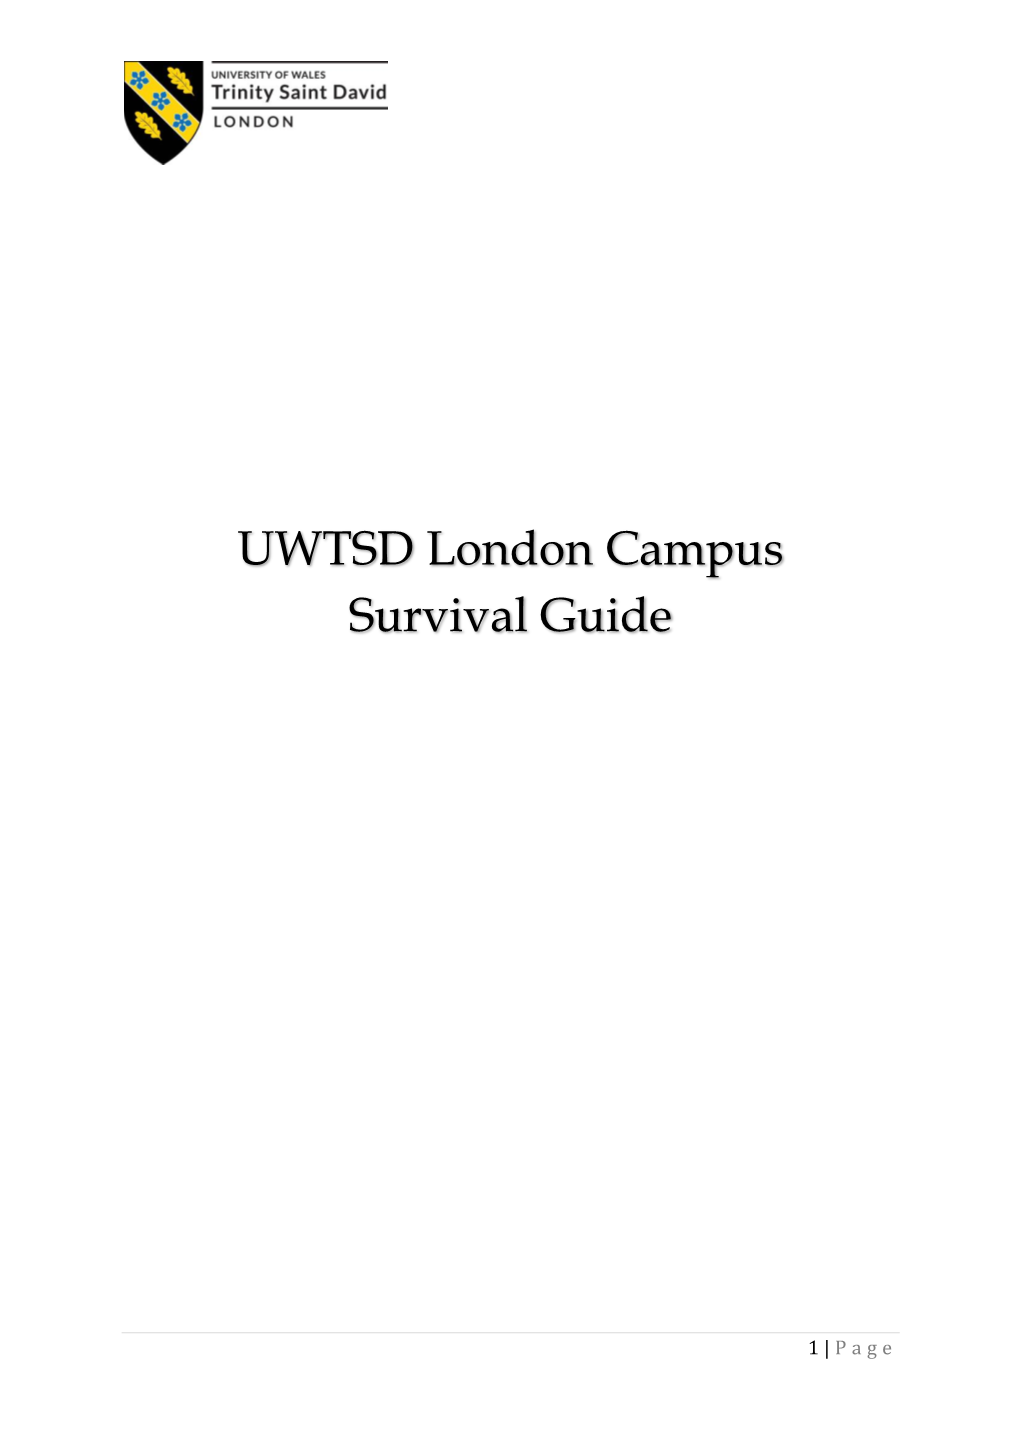 UWTSD London Campus Survival Guide